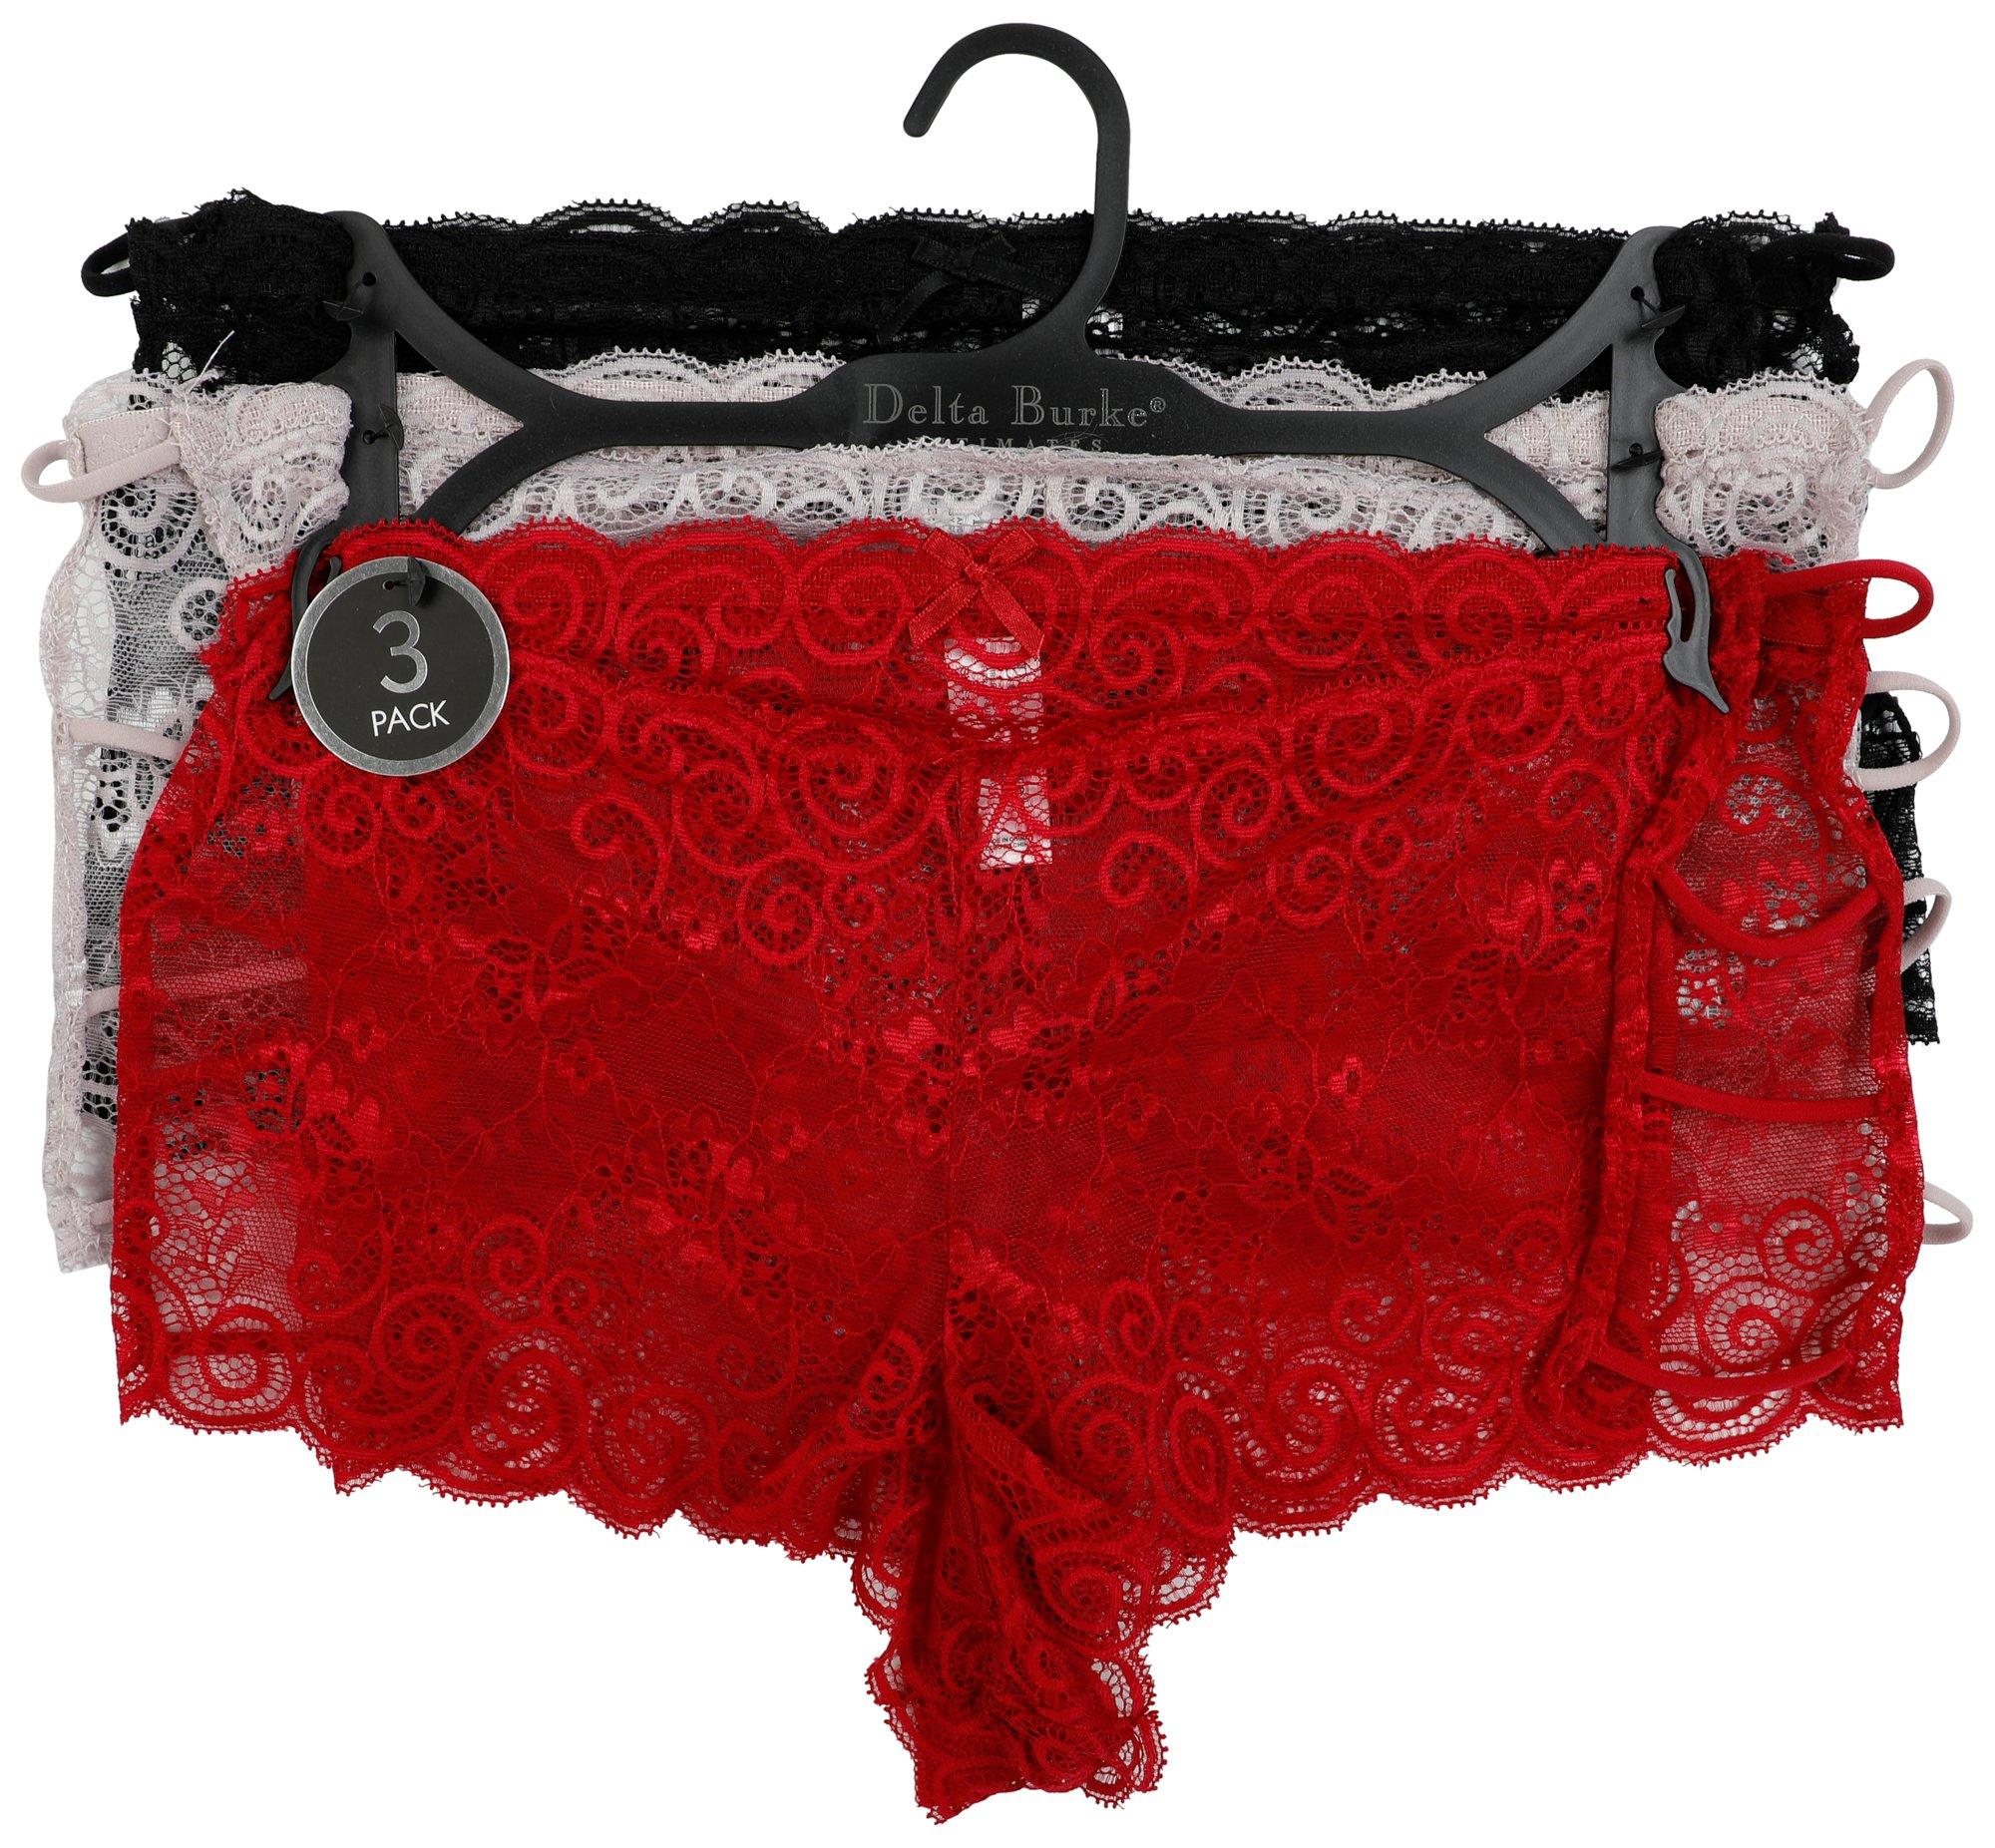 Delta Burke Plus Size Panty 1X 2X oversize panty, Women's Fashion